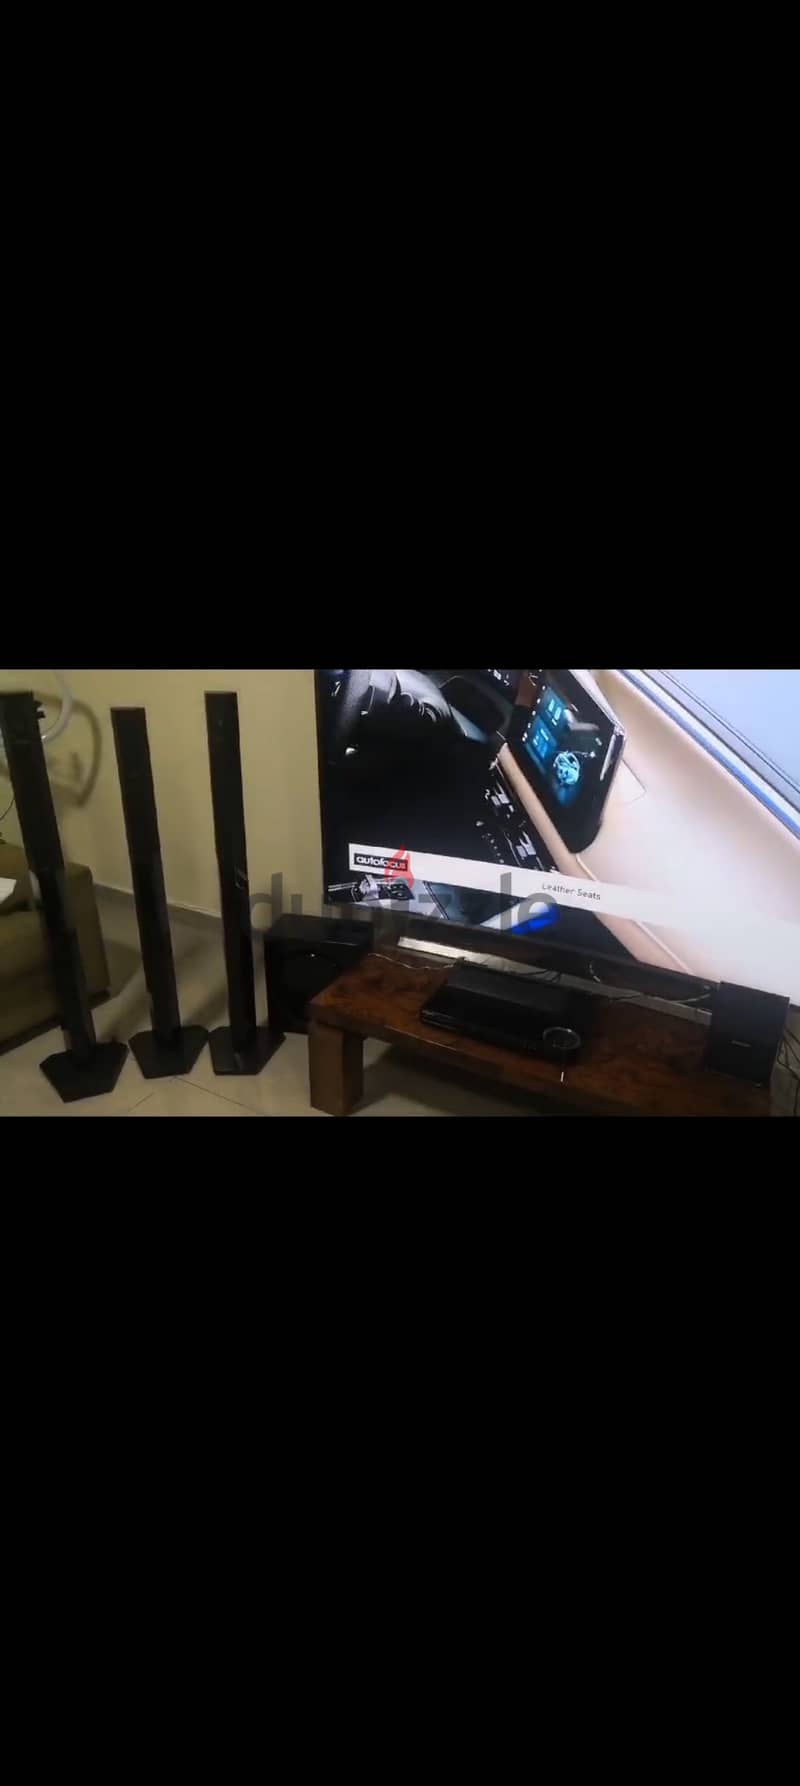 Samsung tv 78 inch Curve + Surround System 7.1 1